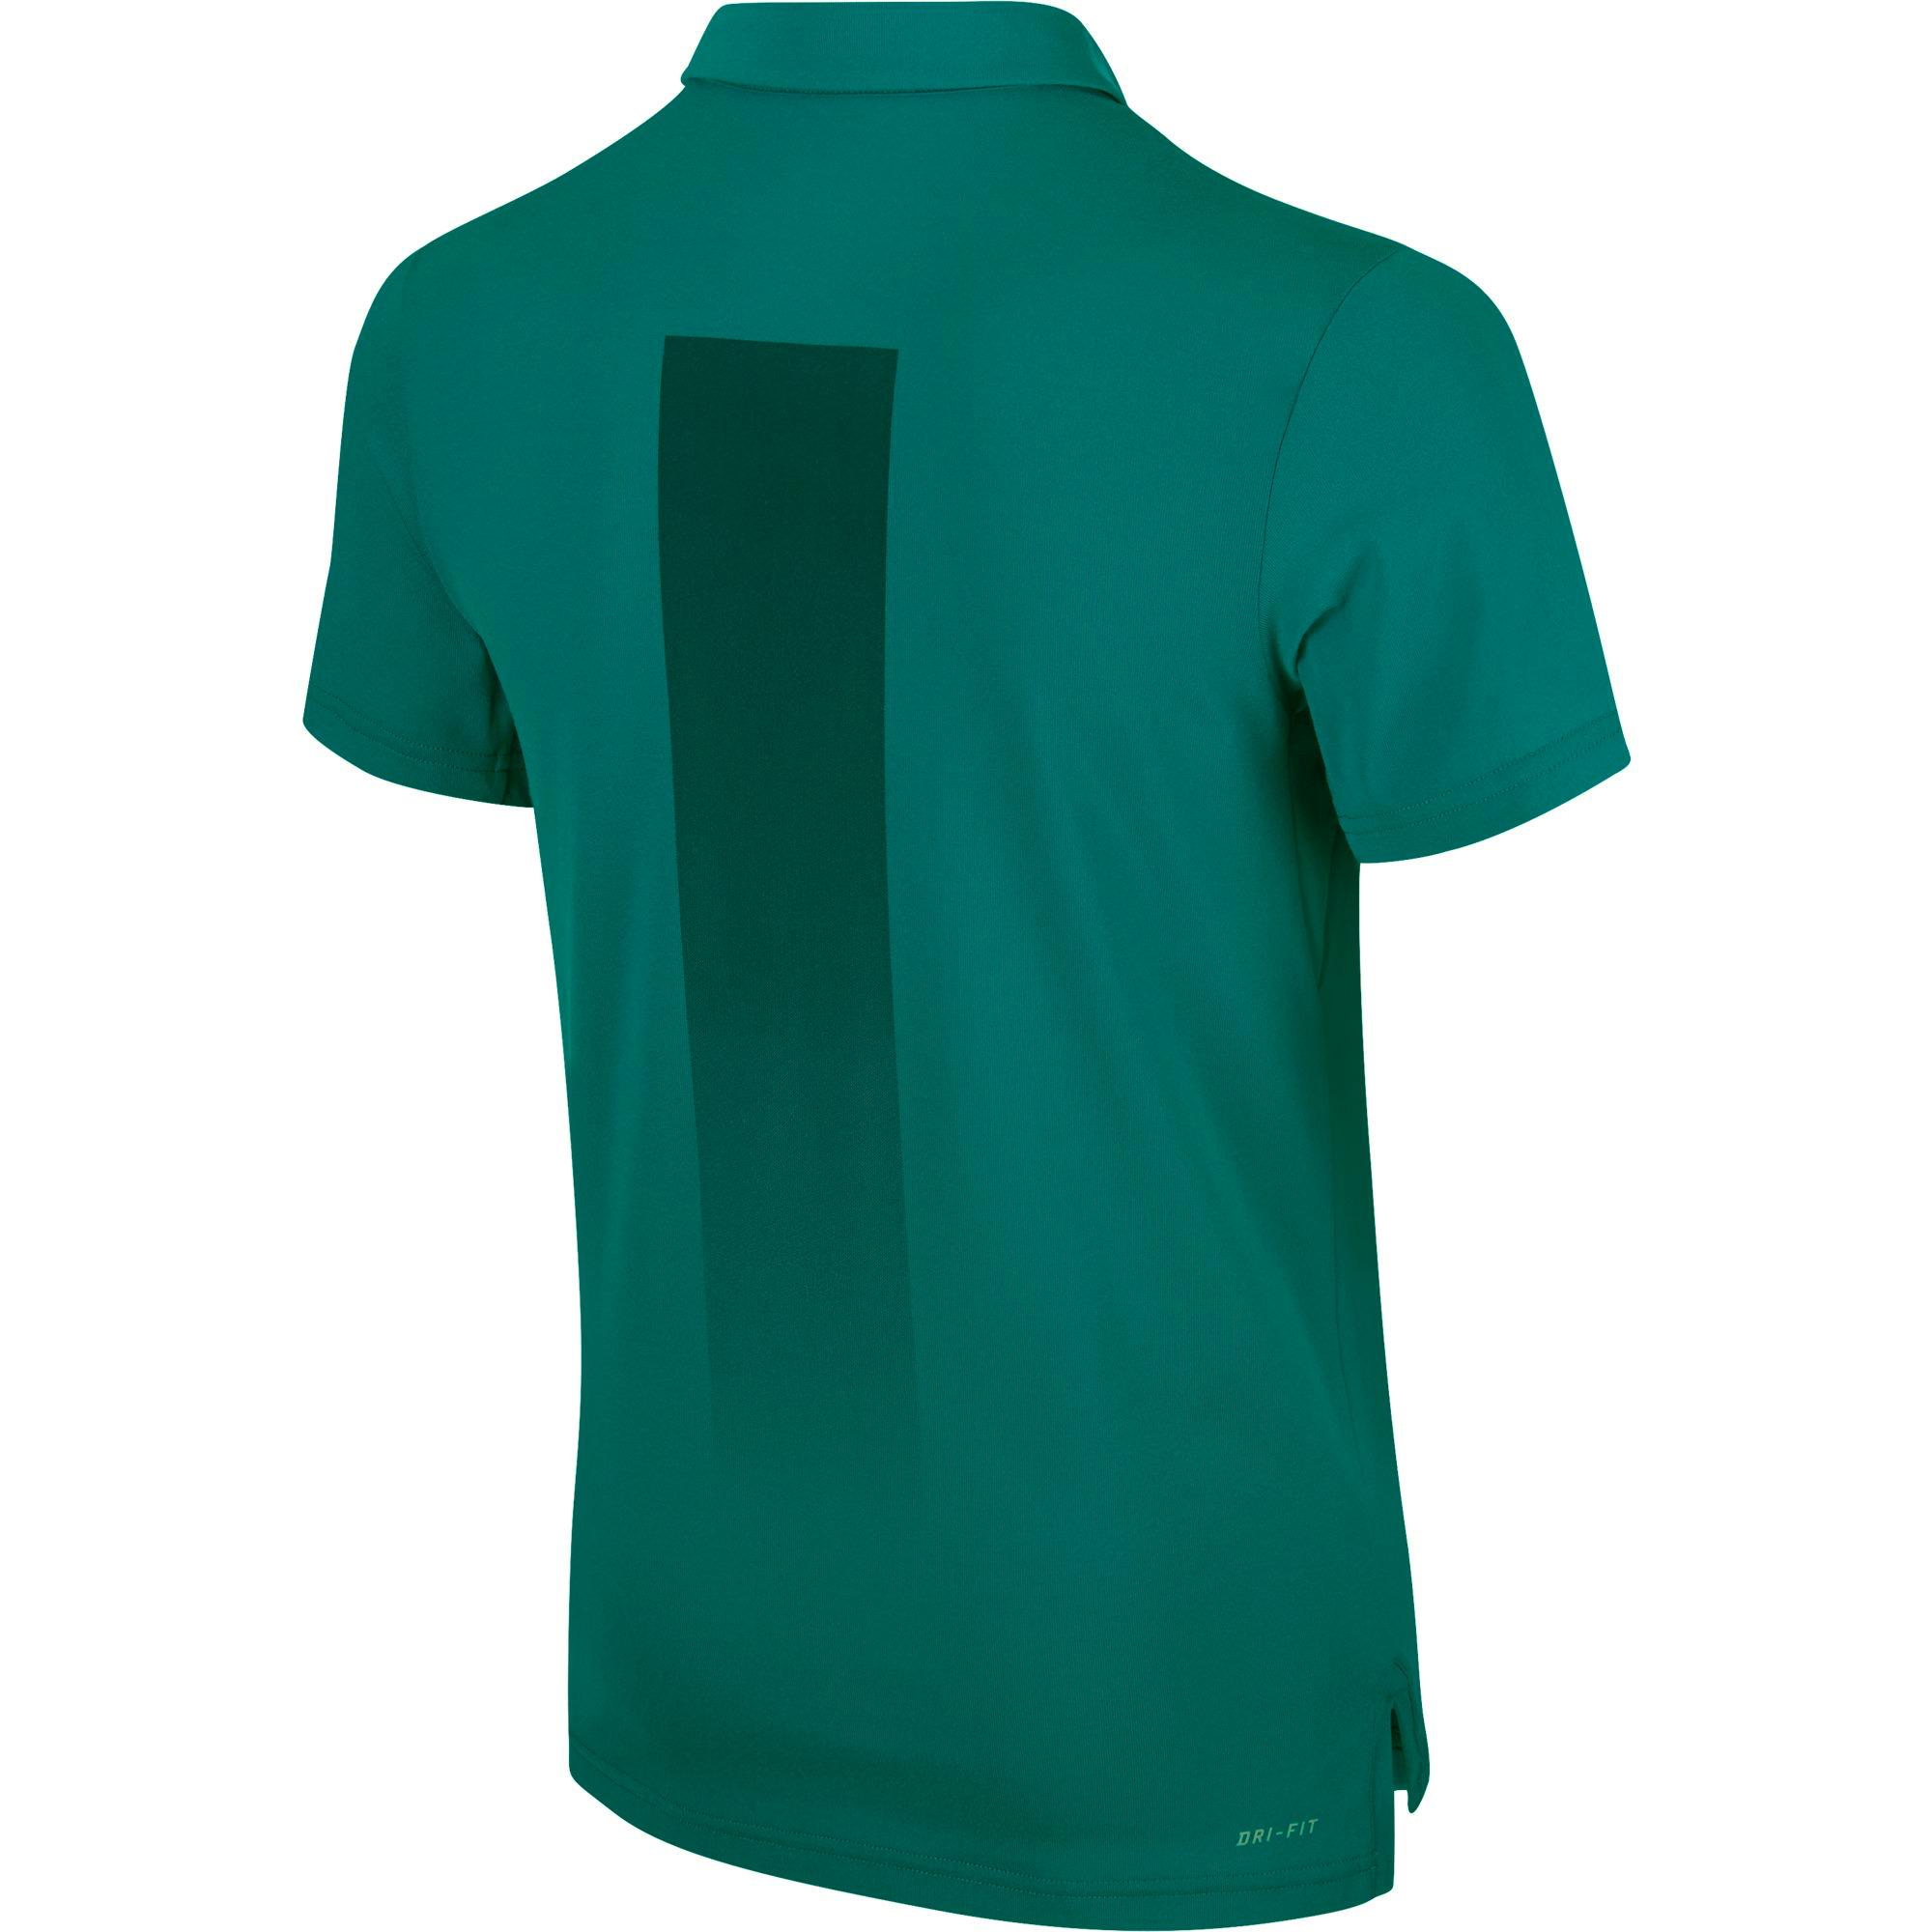 Nike Boys RF Polo - Radiant Emerald/Teal - Tennisnuts.com